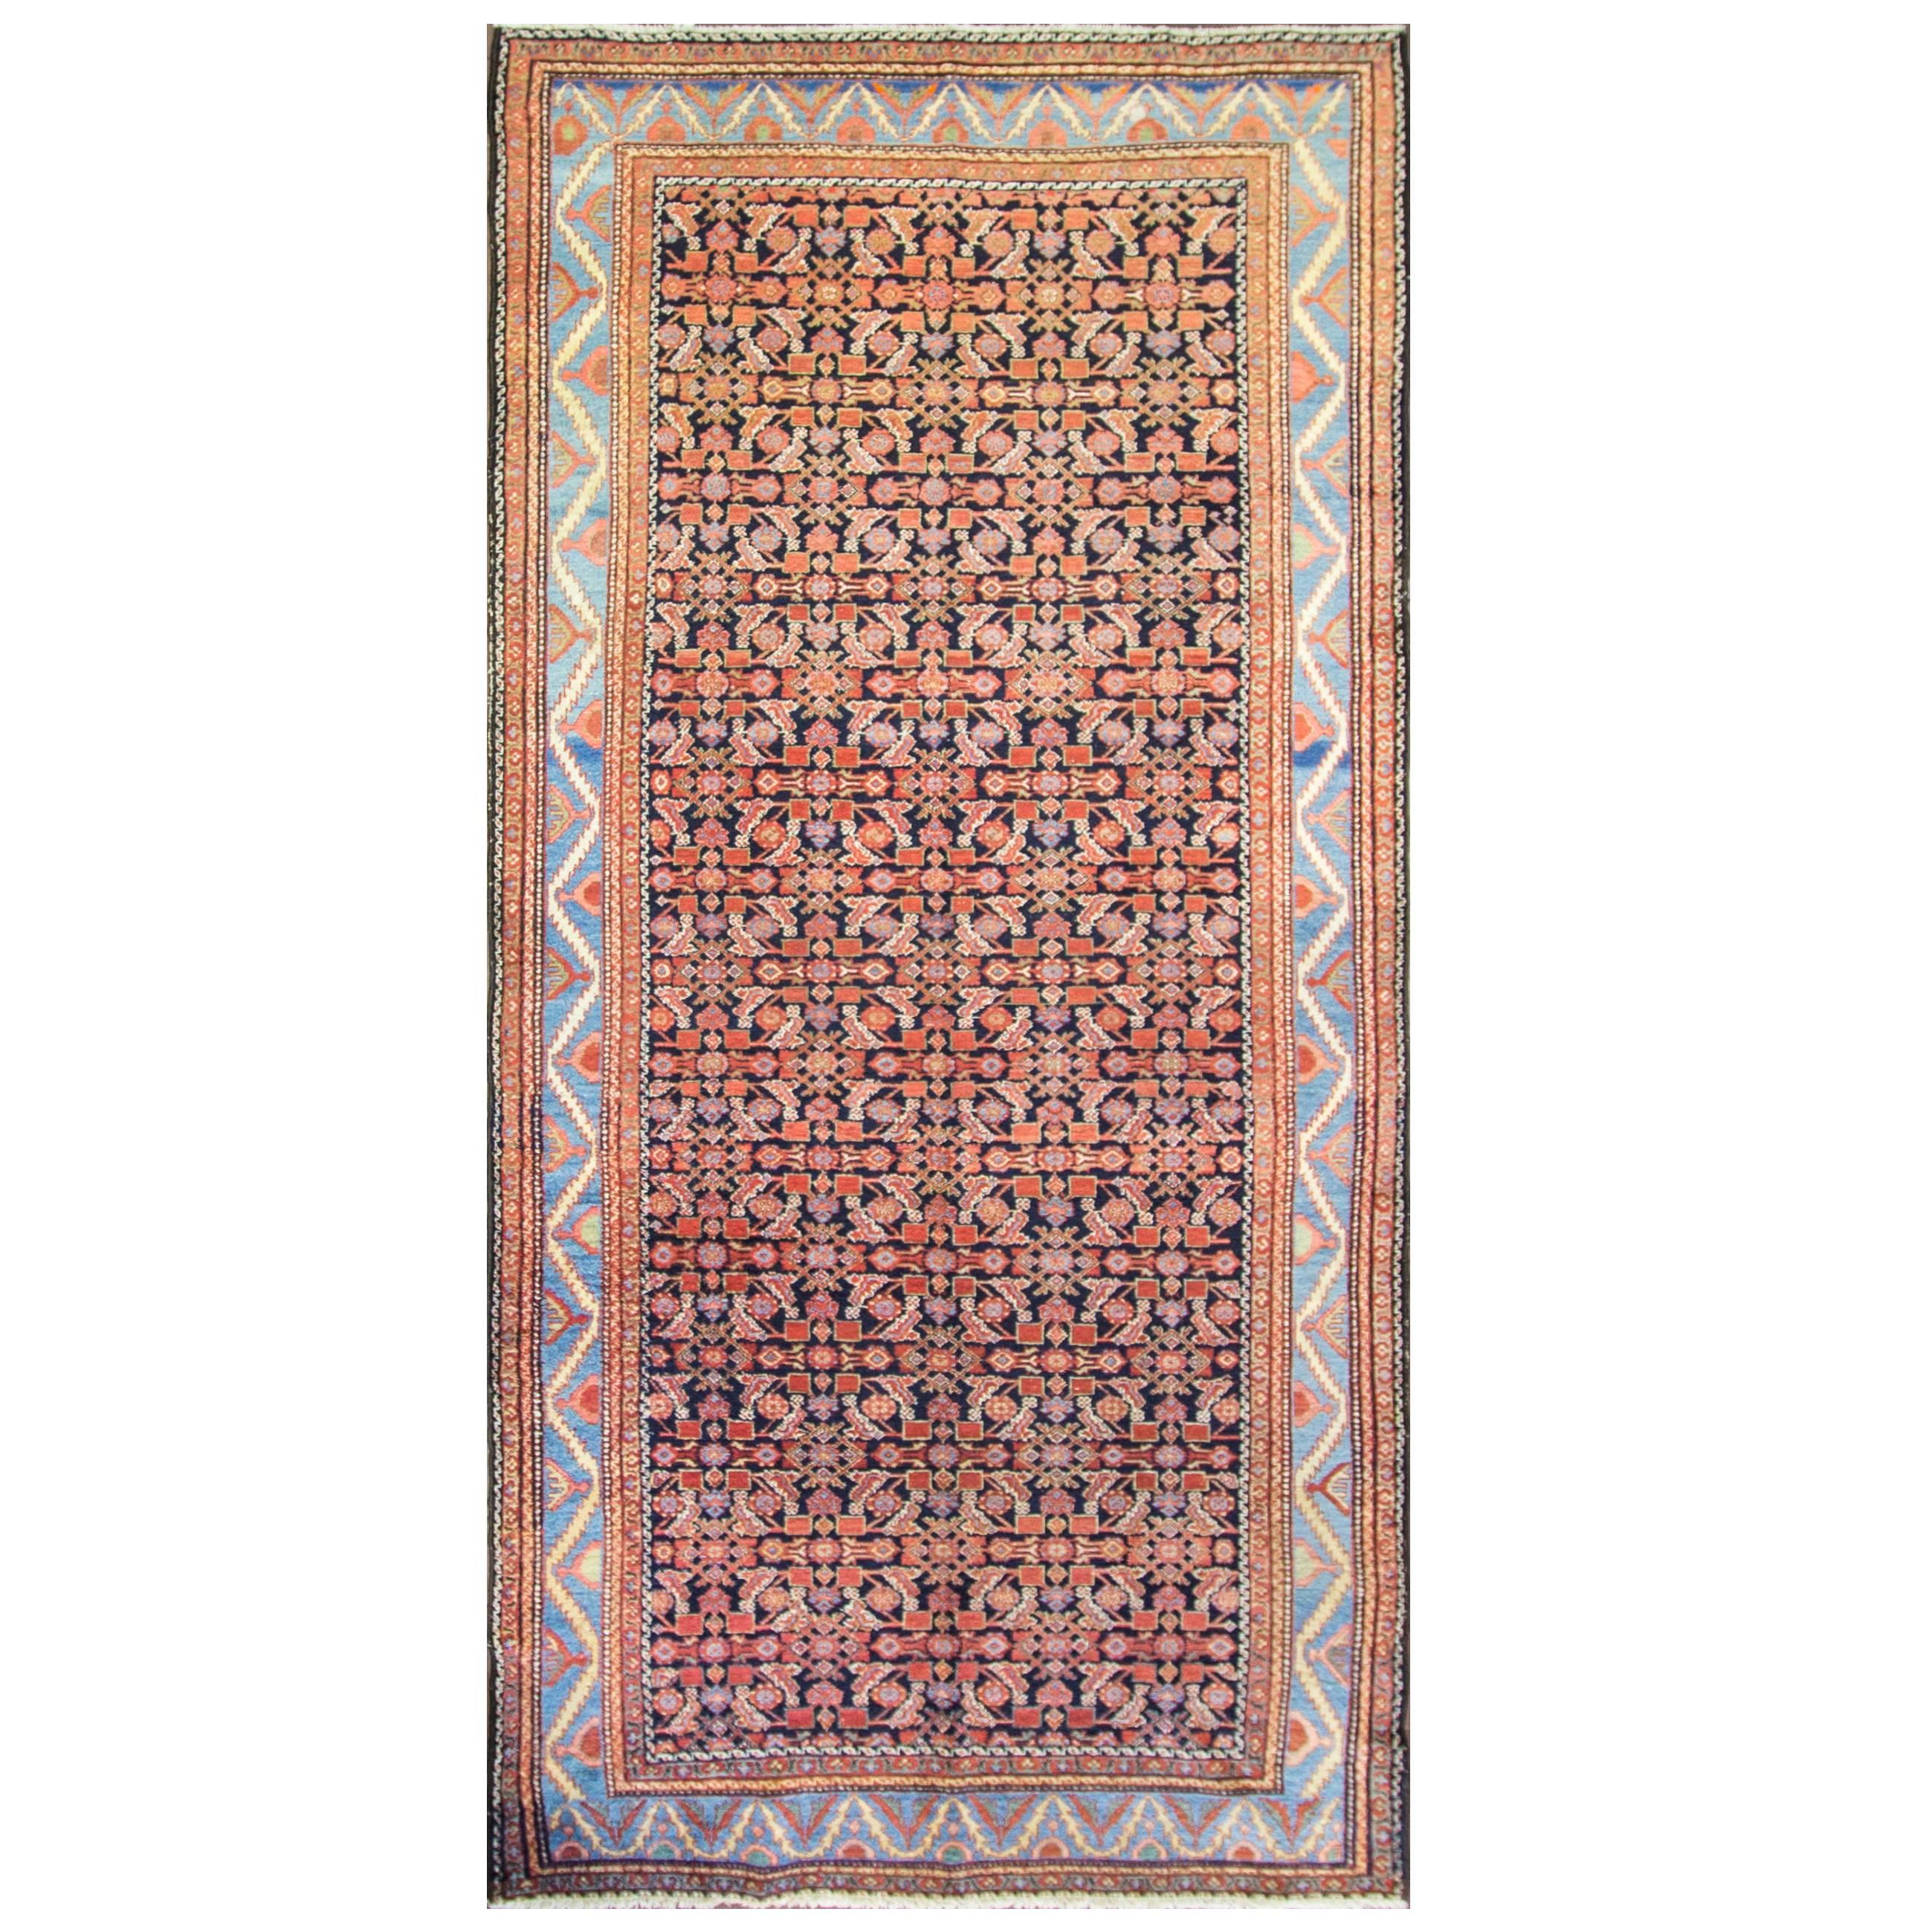 Antique Persian Baktiari Carpet/Runner/Galley Size 5' x 10'8"